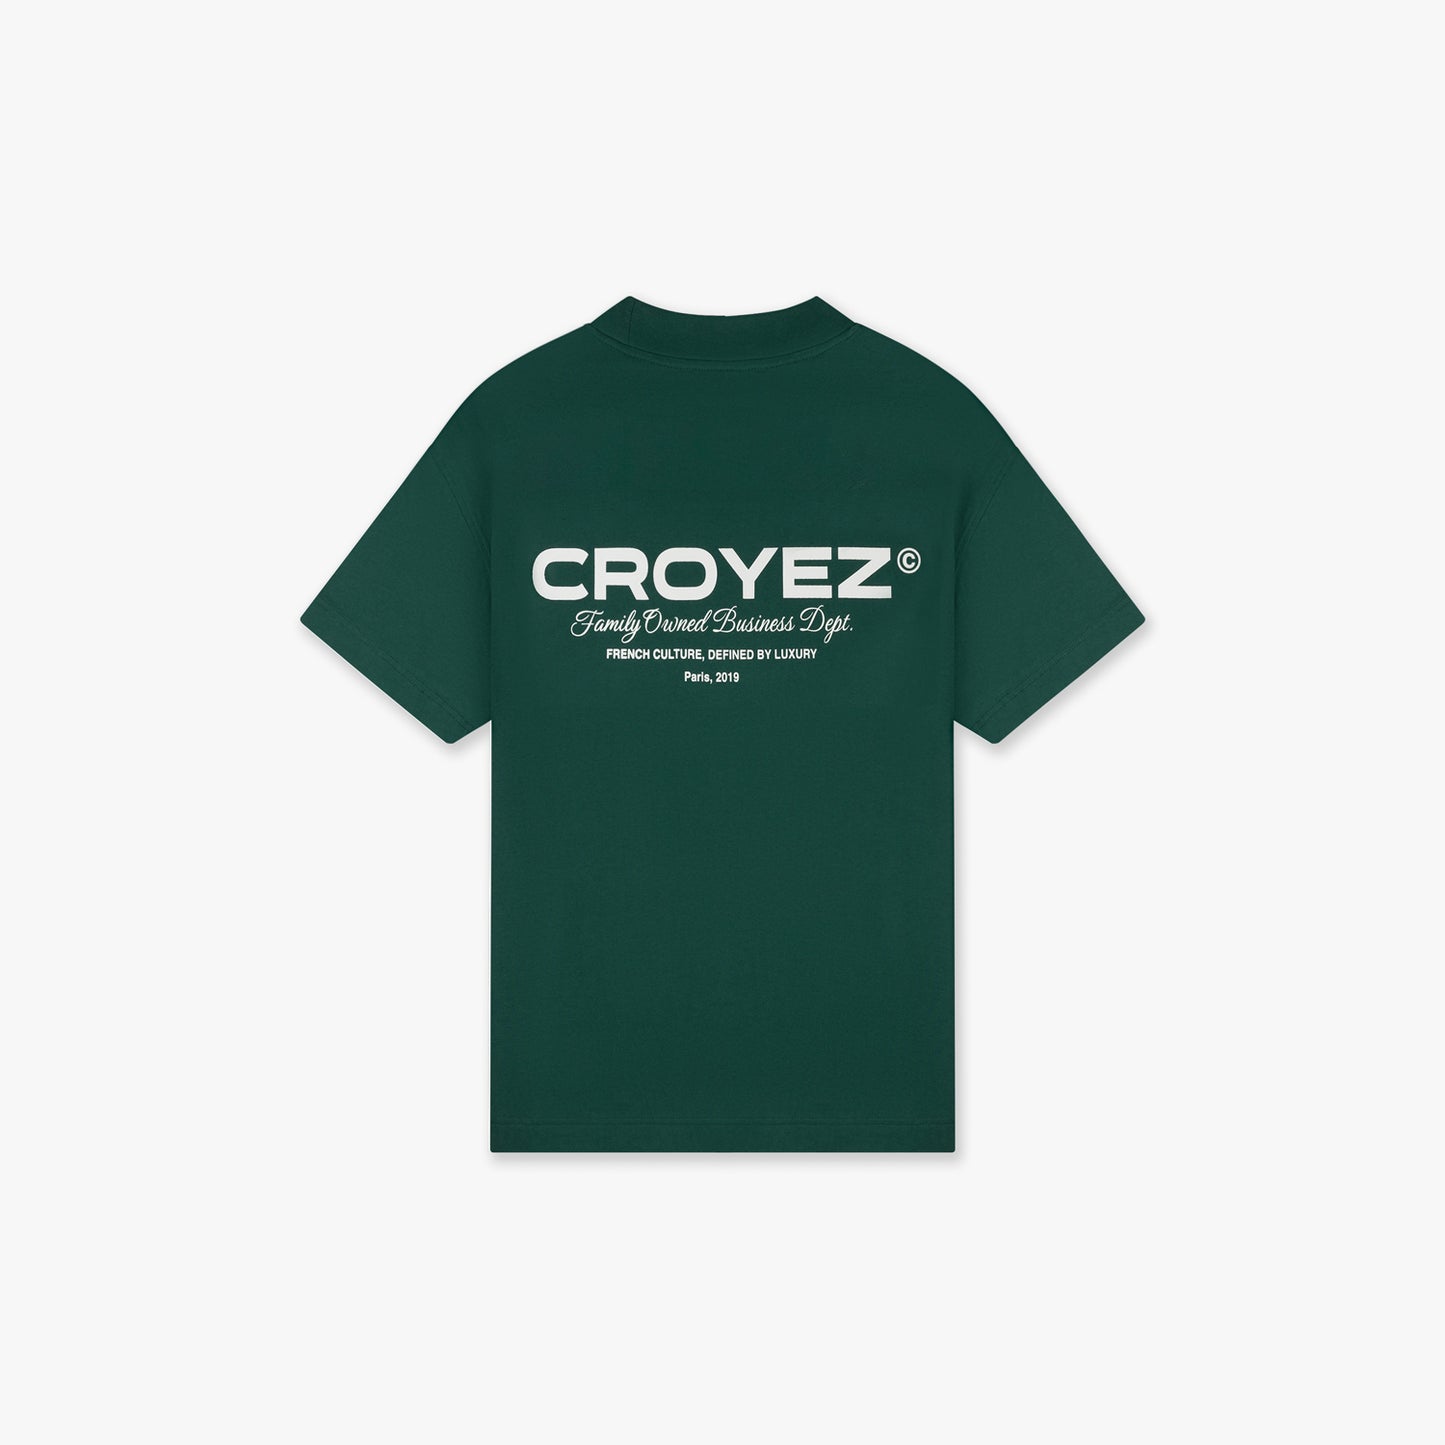 CROYEZ FAMILY OWNED BUSINESS T-SHIRT - DARK GREEN/OFF-WHITE